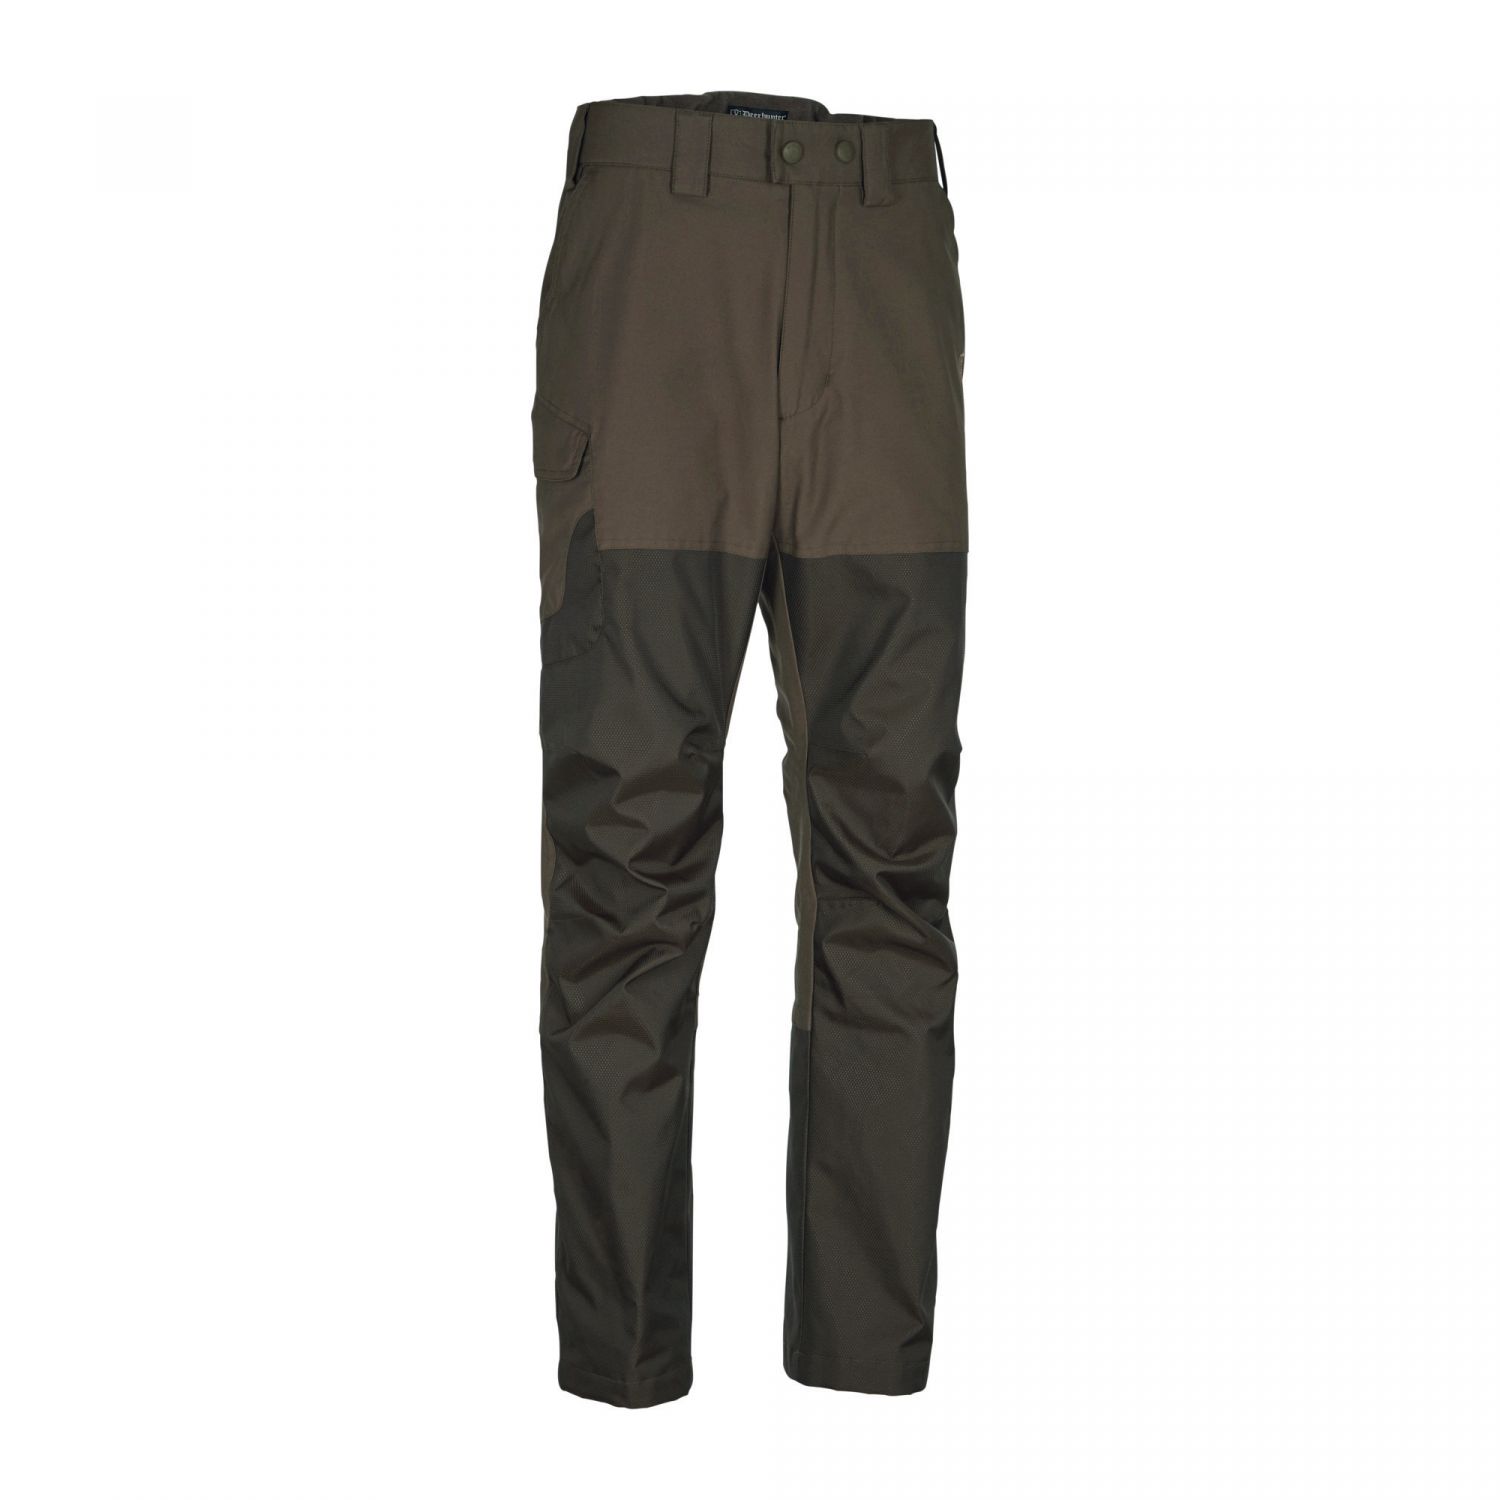 Deerhunter Pantalone Upland con rinforzi cod 3556-380Deerhunter Upland trousers with Reinforcement  3556-380